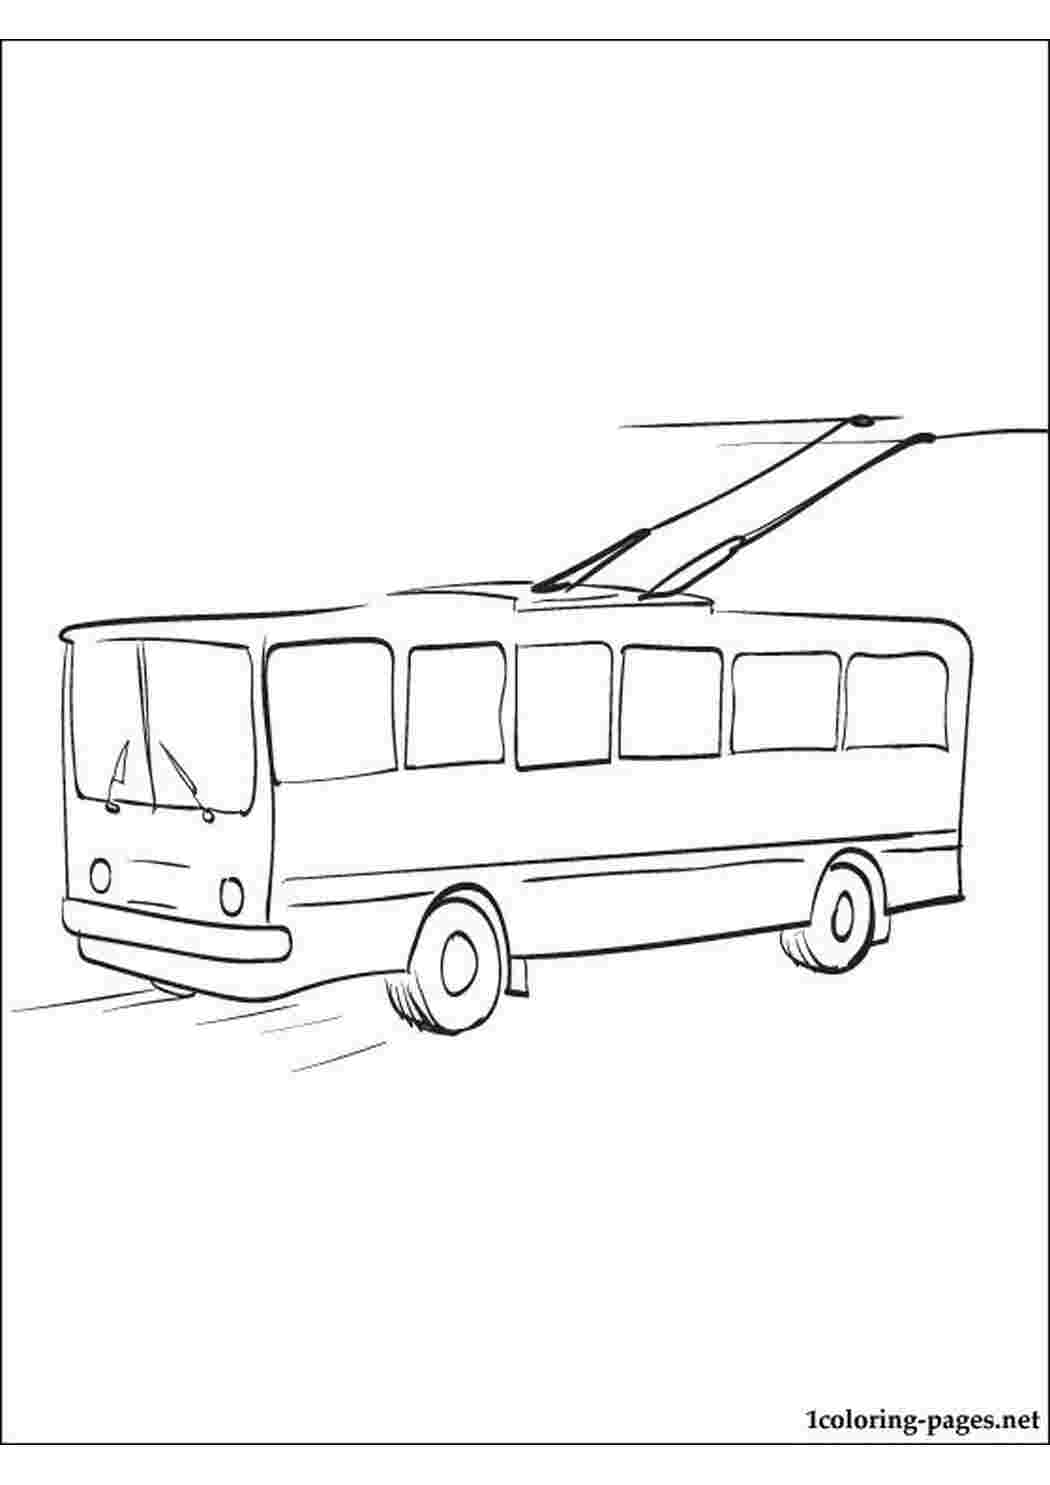 Раскраска транспорт троллейбус